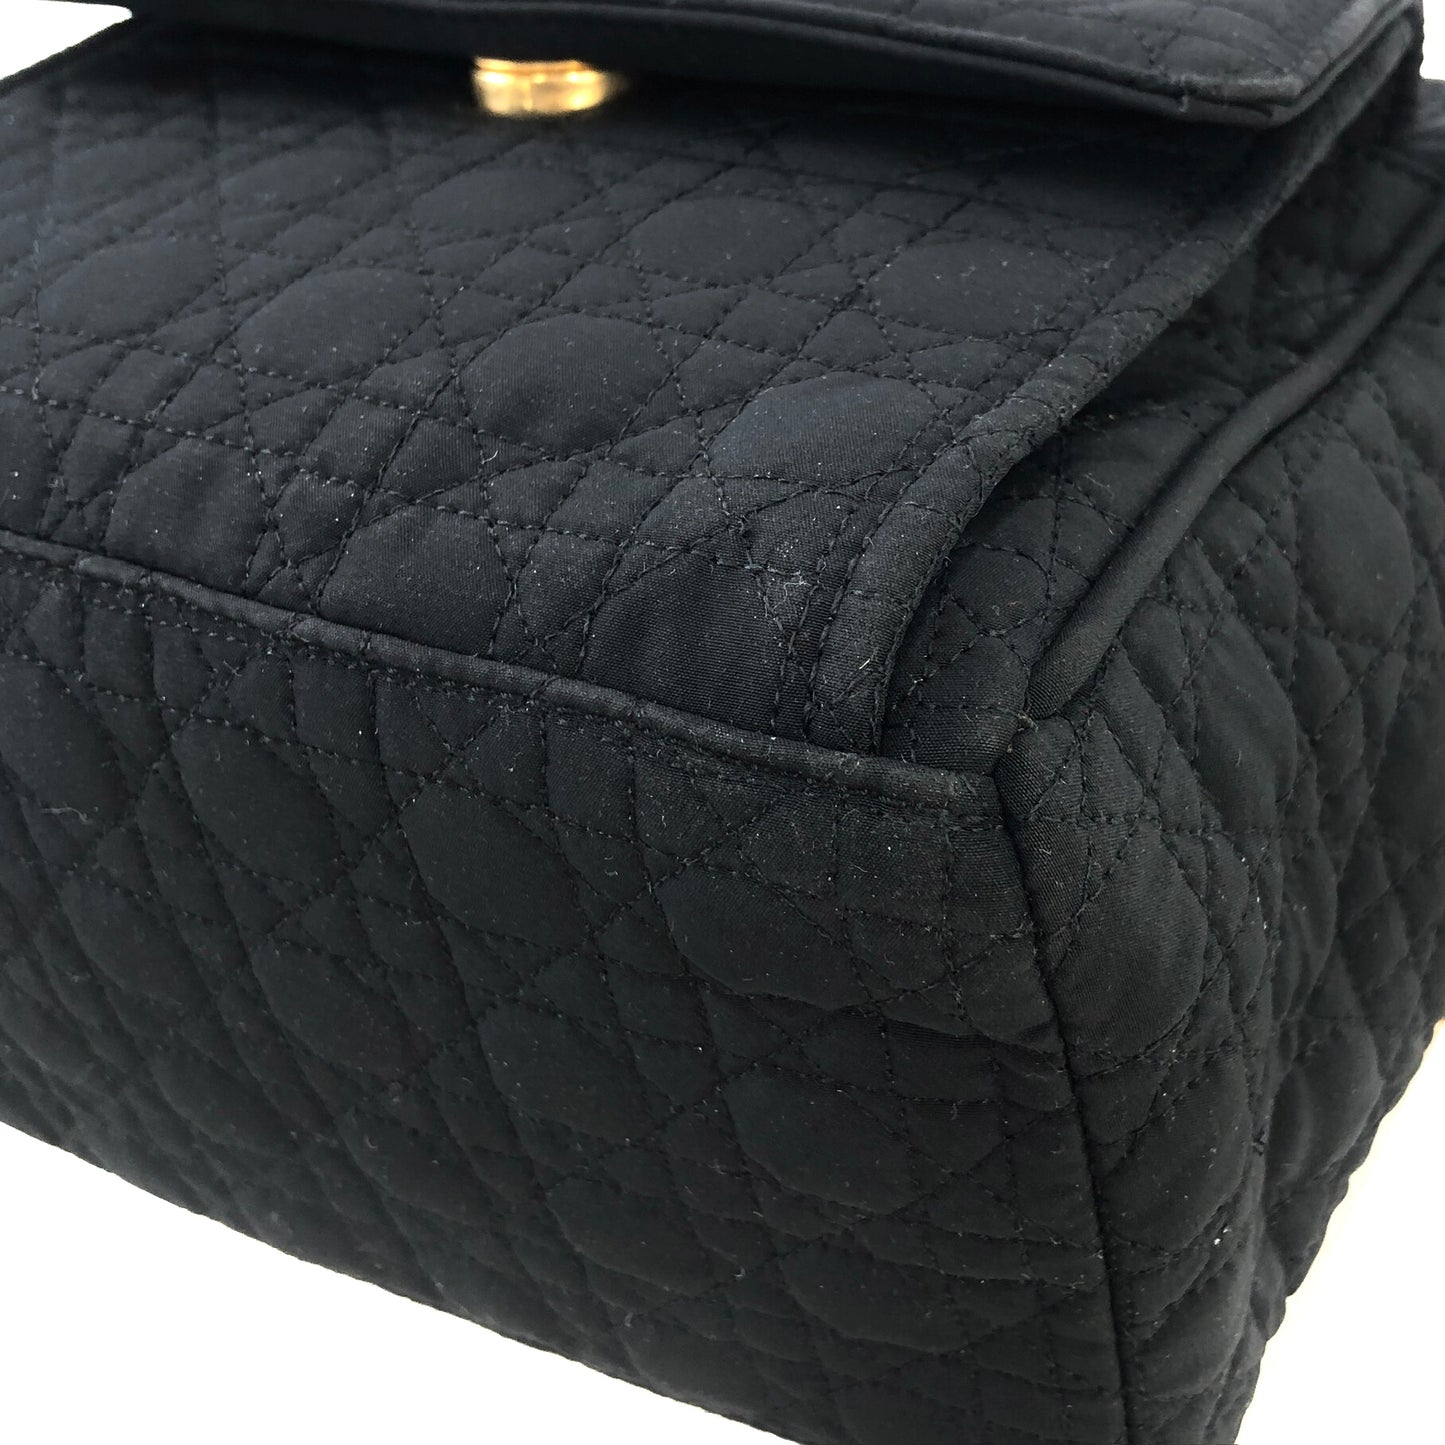 Christian Dior Cannage Logo Motif Charm Nylon Shoulder bag Black Vintage e7e3wt